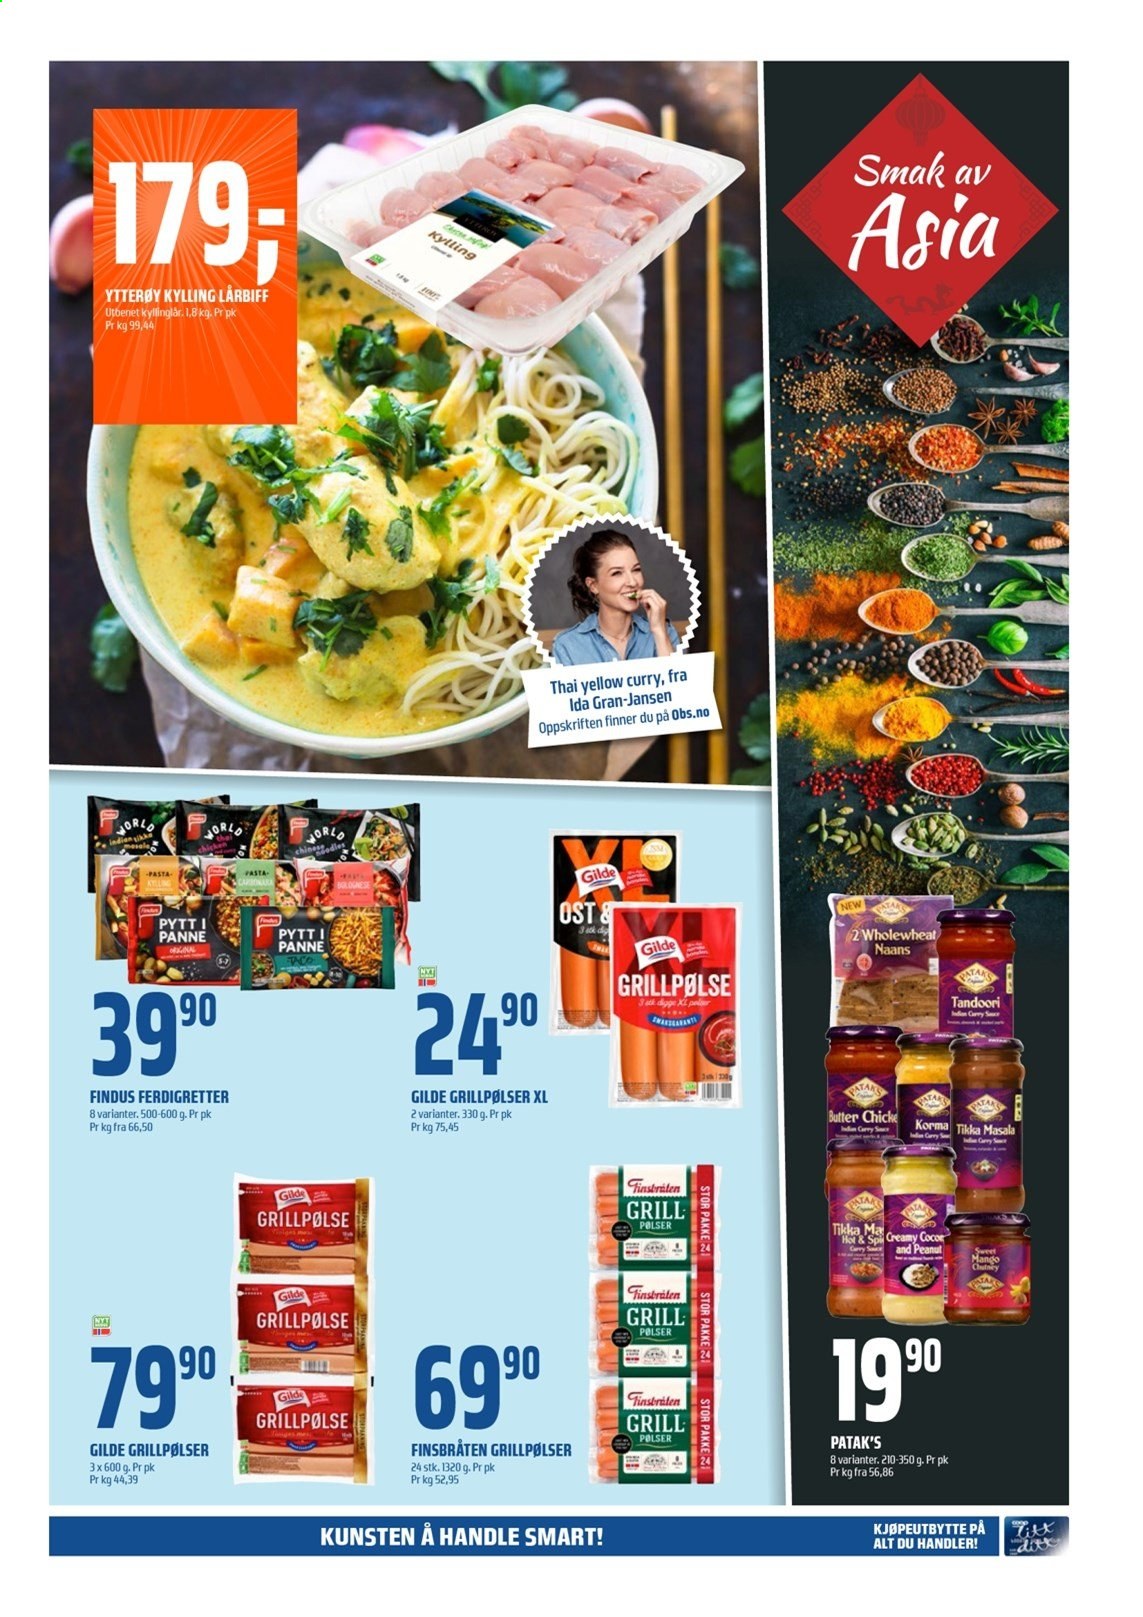 thumbnail - Kundeavis Coop Obs - 13.6.2021 - 19.6.2021 - Produkter fra tilbudsaviser - mango, kyllinglår, Patak’s, pytt i panne, grillpølse, ost, Findus, pasta, curry, panne. Side 5.